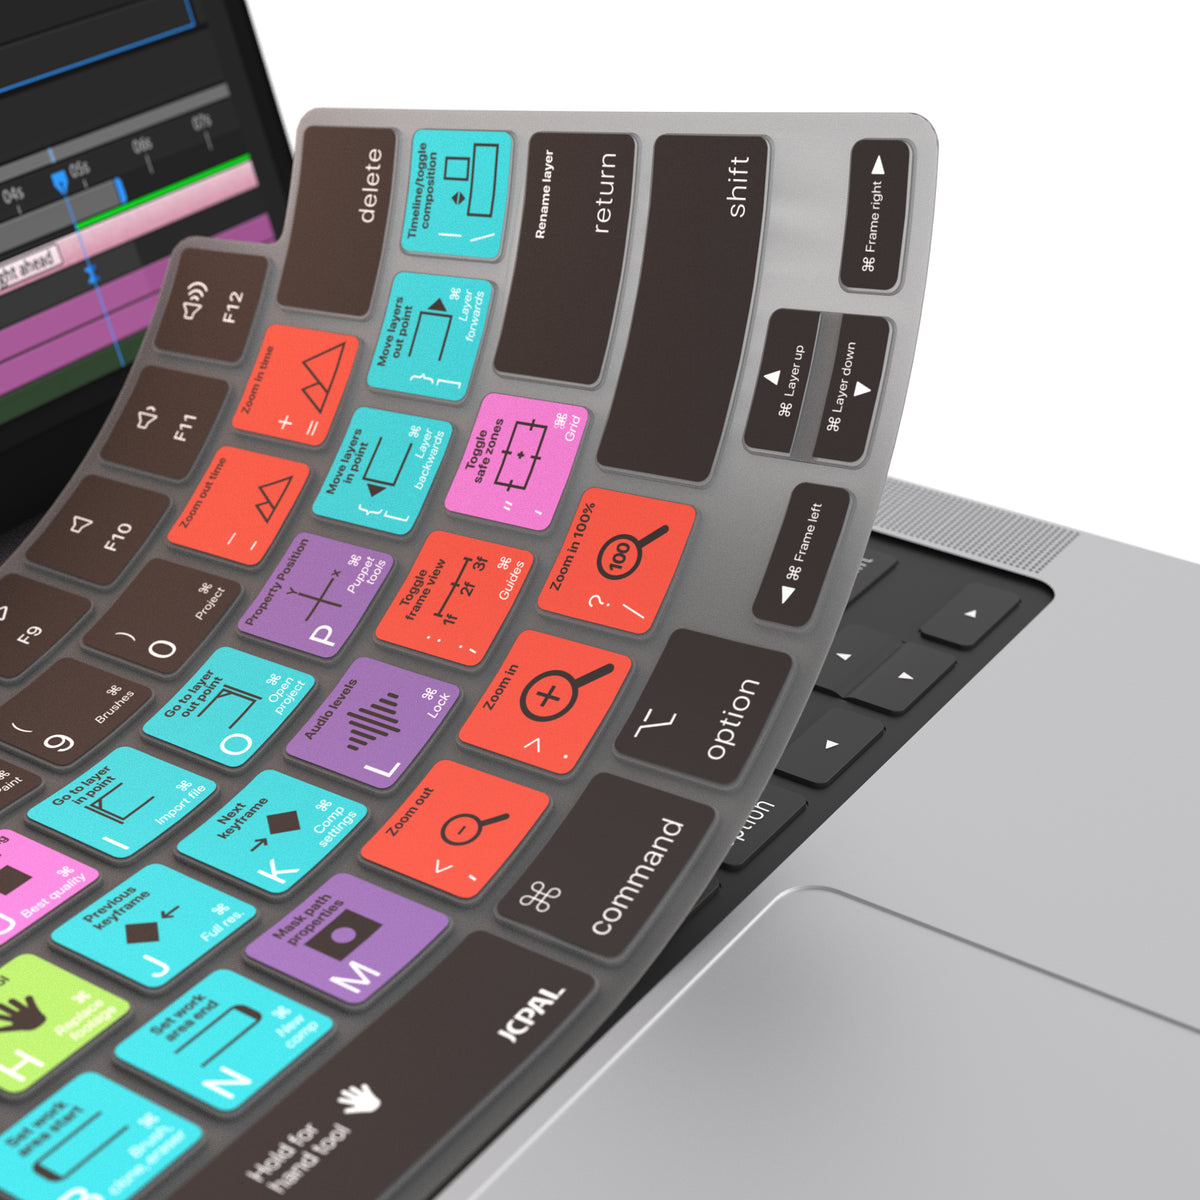 VerSkin Adobe After Effects Shortcut Keyboard Protector